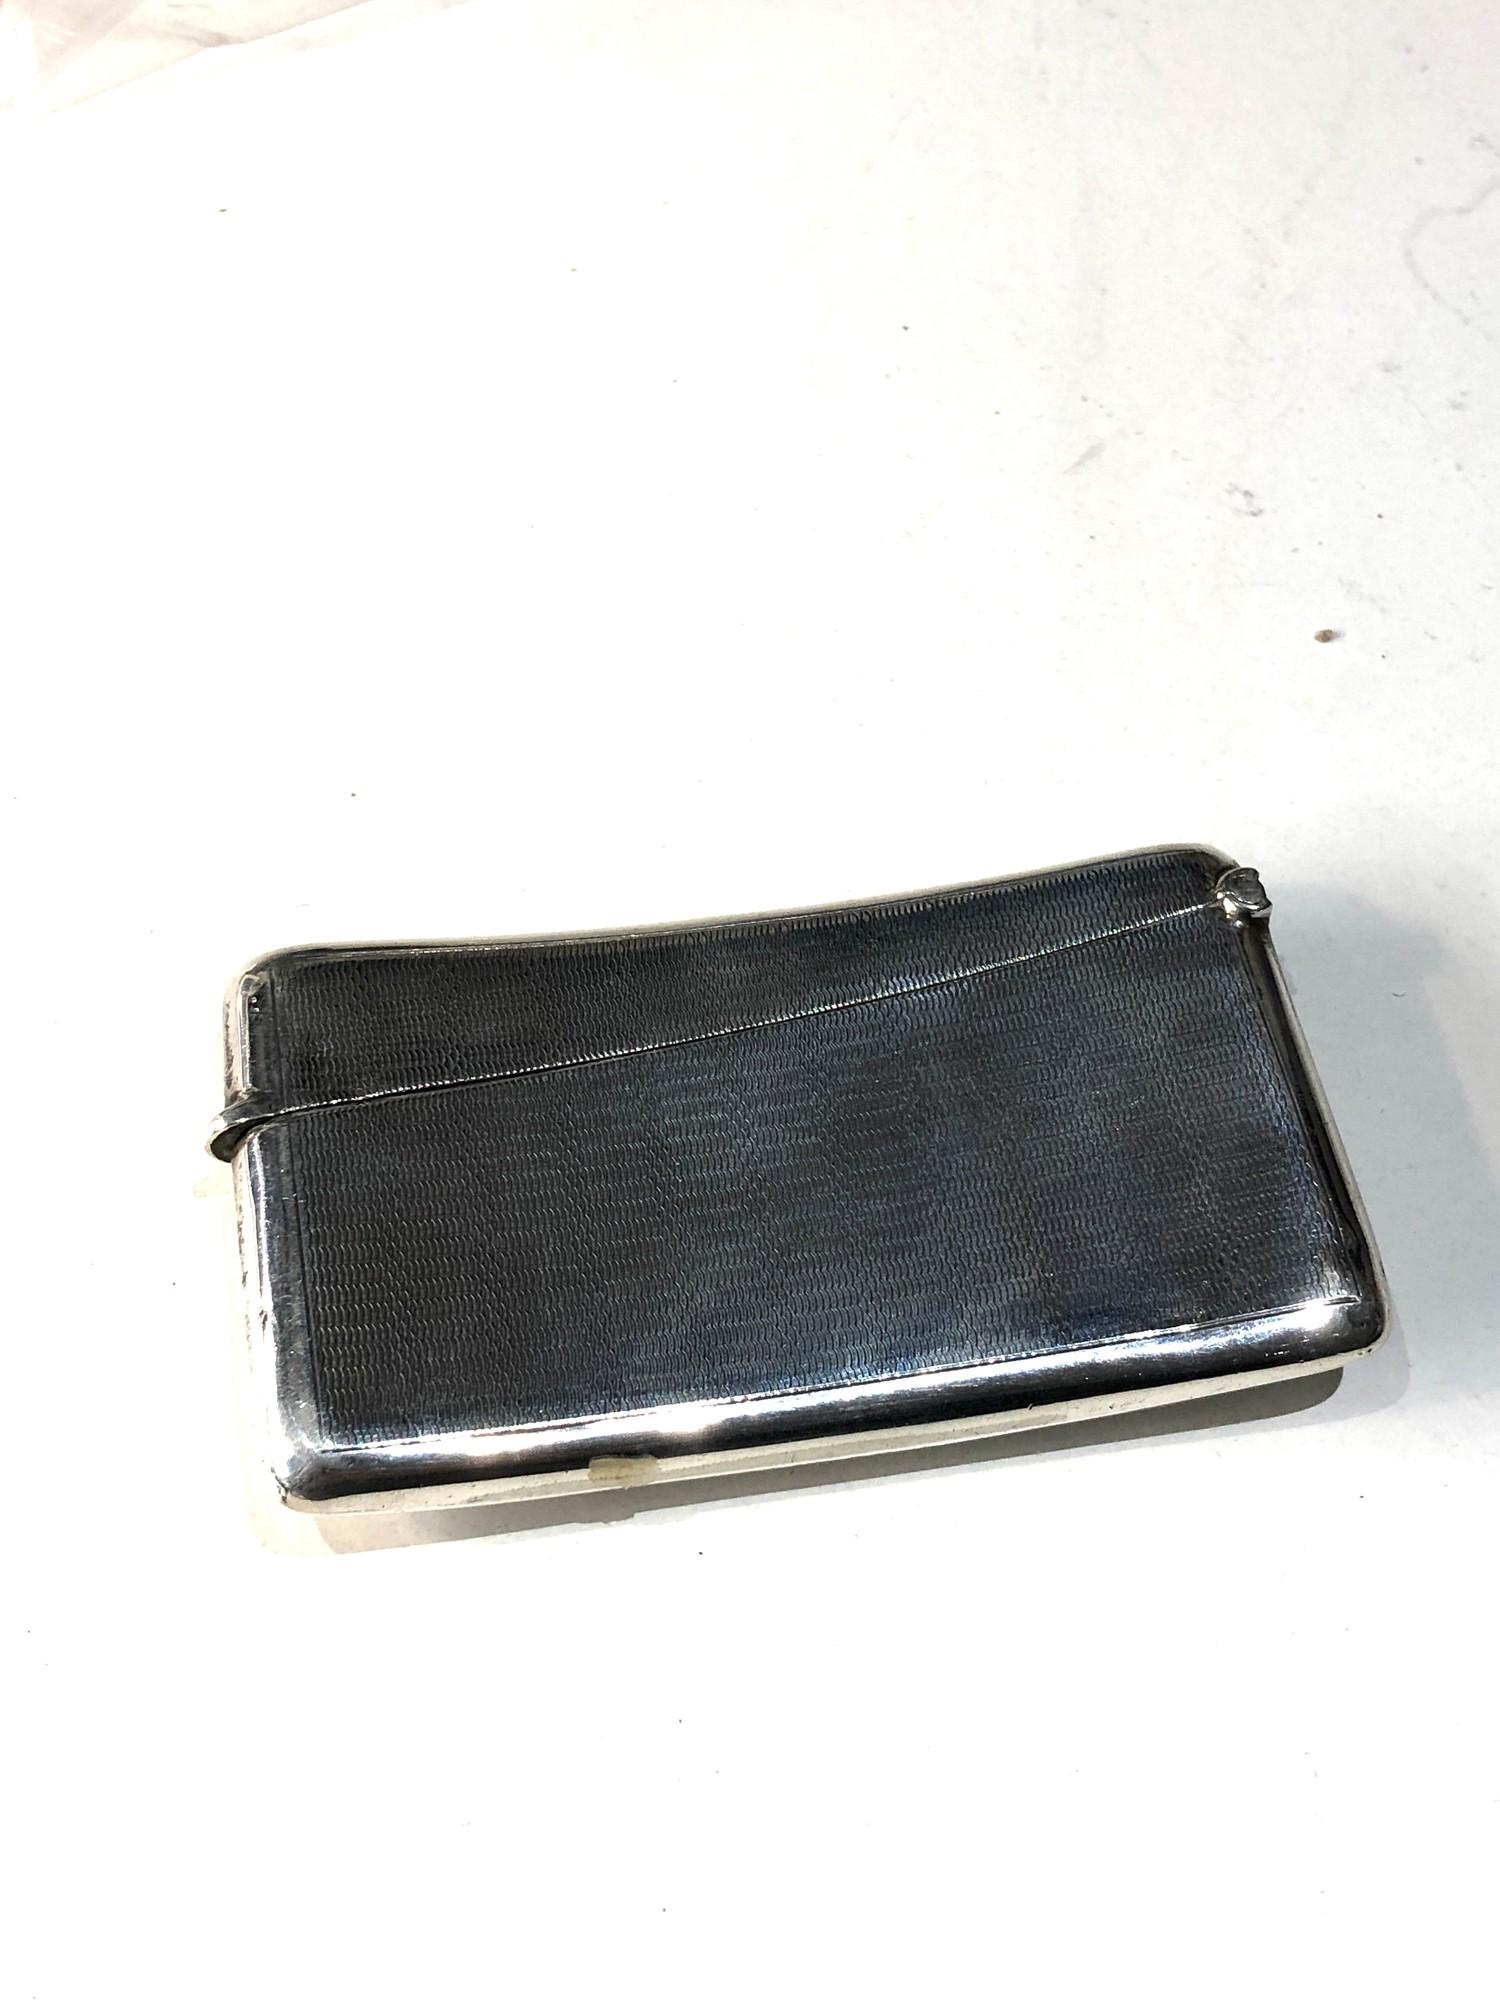 Antique silver card case Chester silver hallmarks - Image 3 of 3